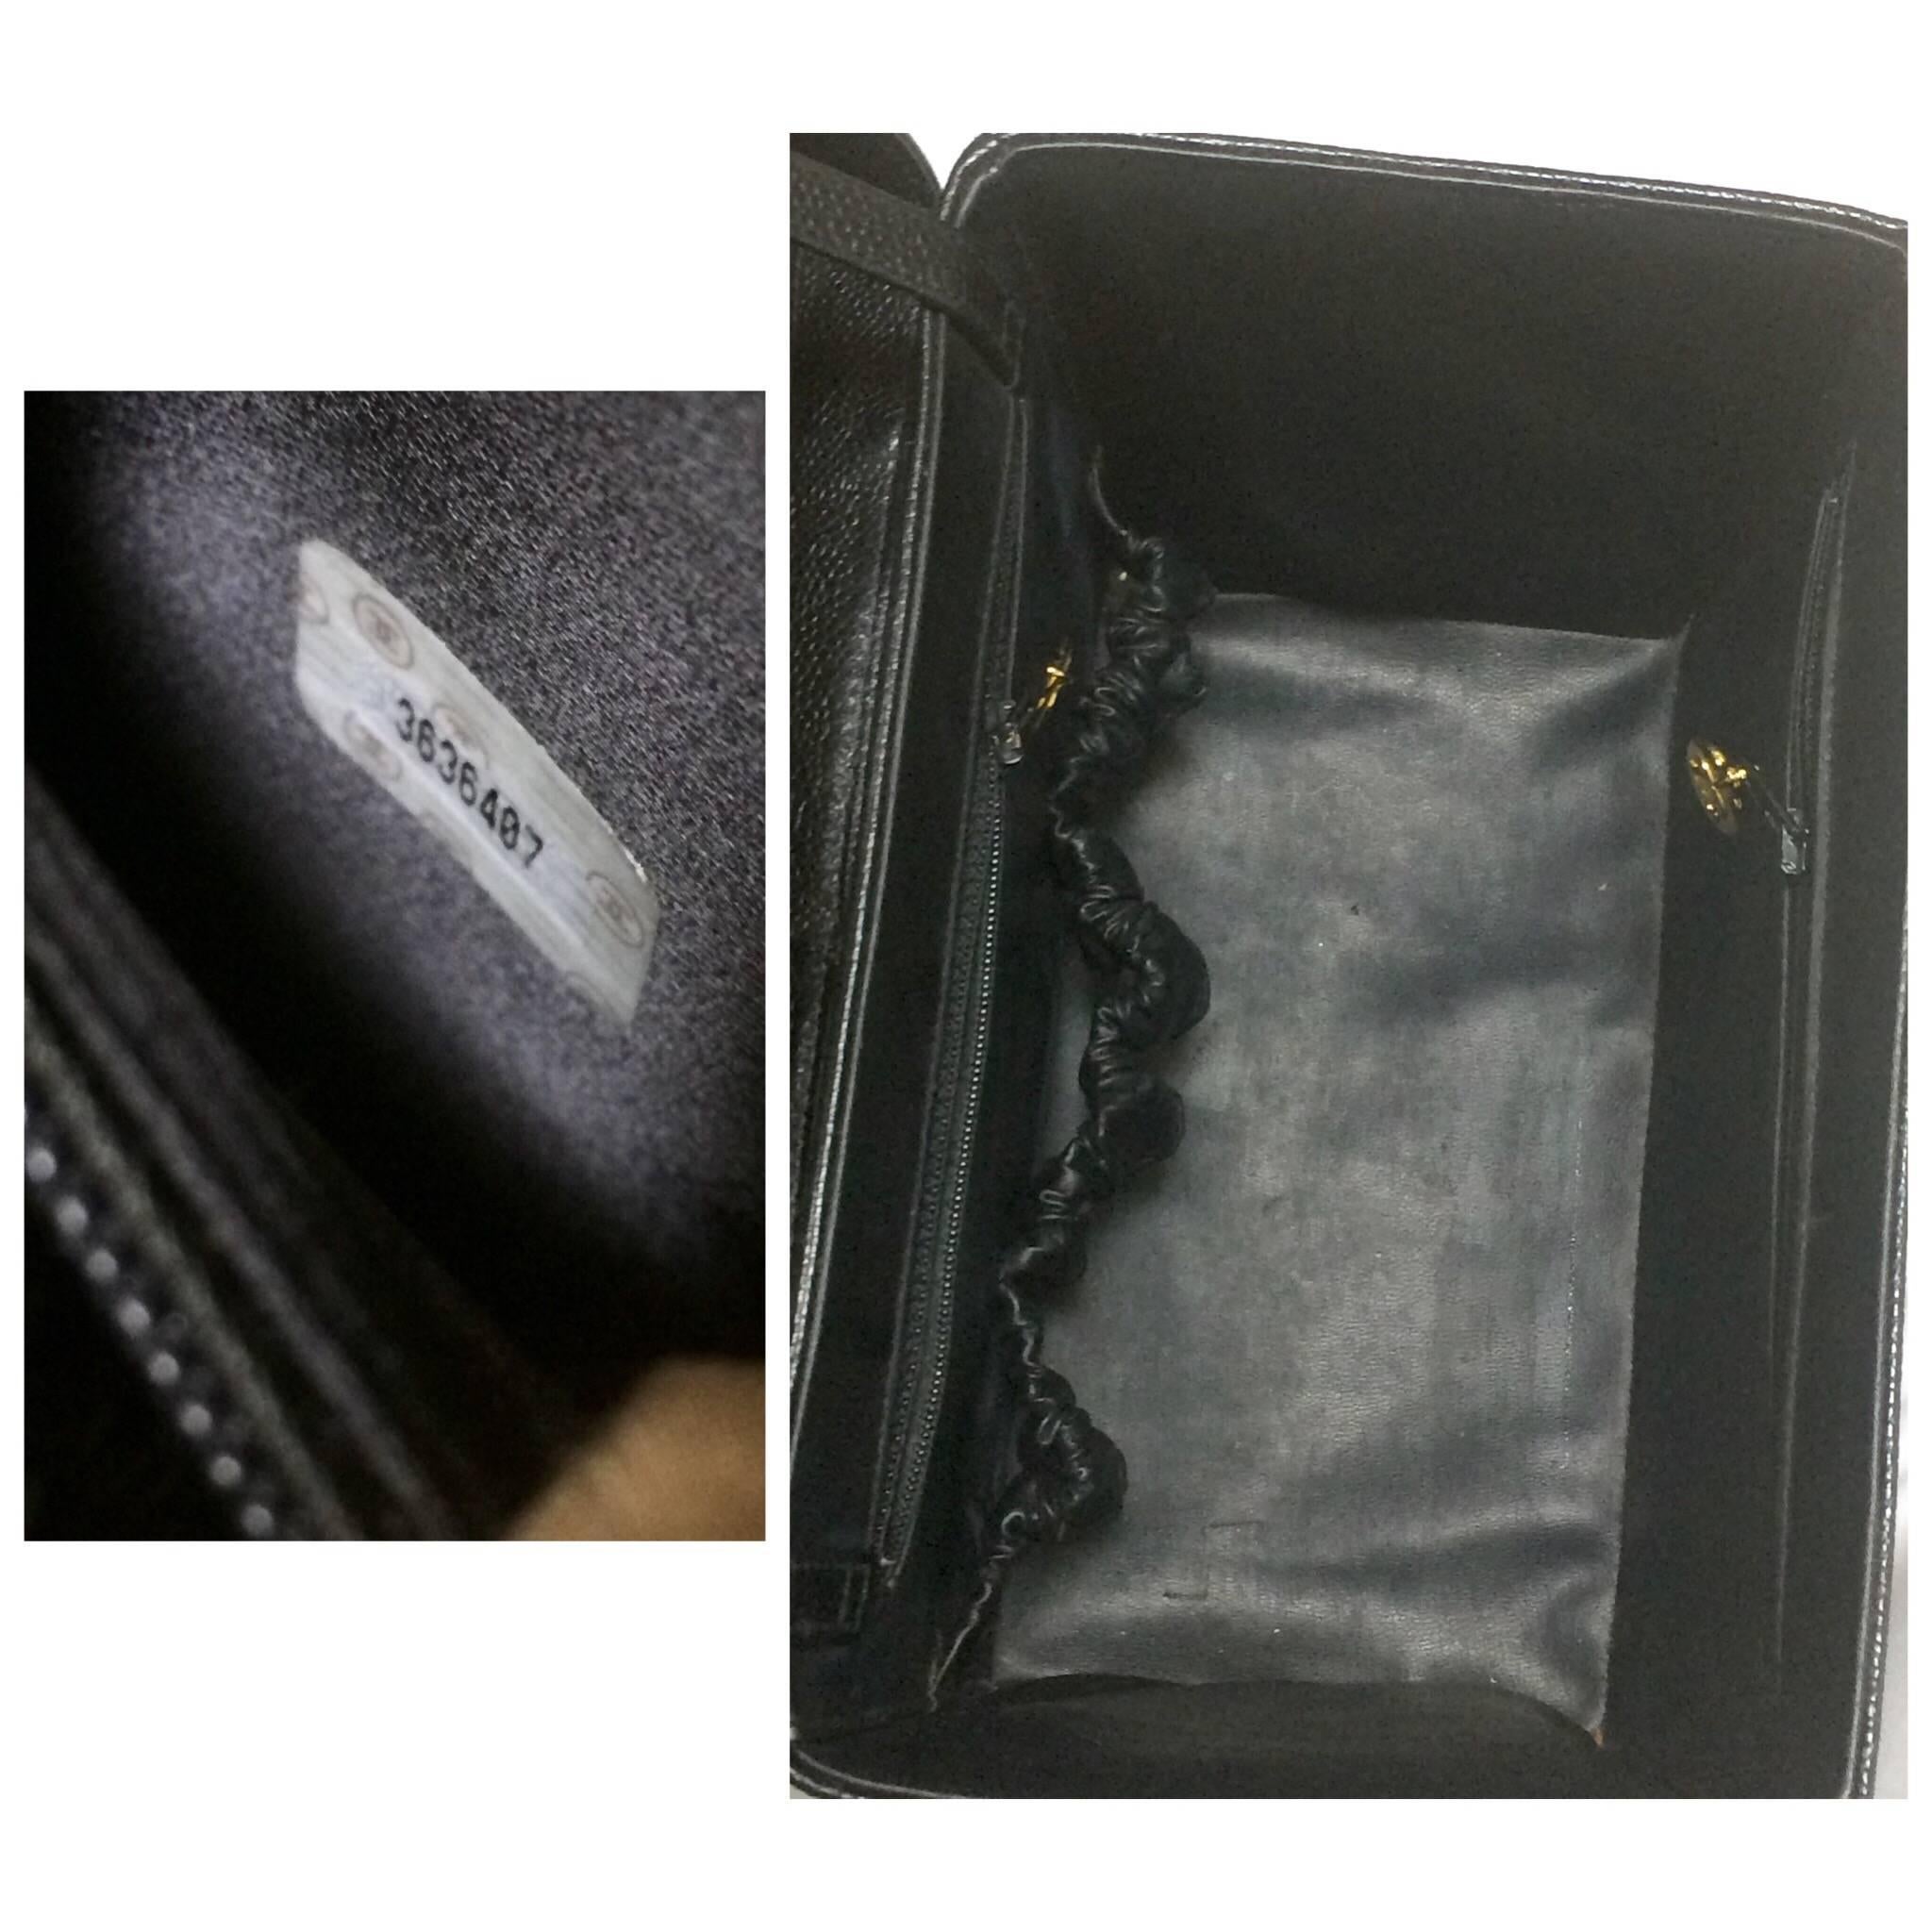 Vintage CHANEL black caviar leather large vanity purse, lunchbox style handbag. 2